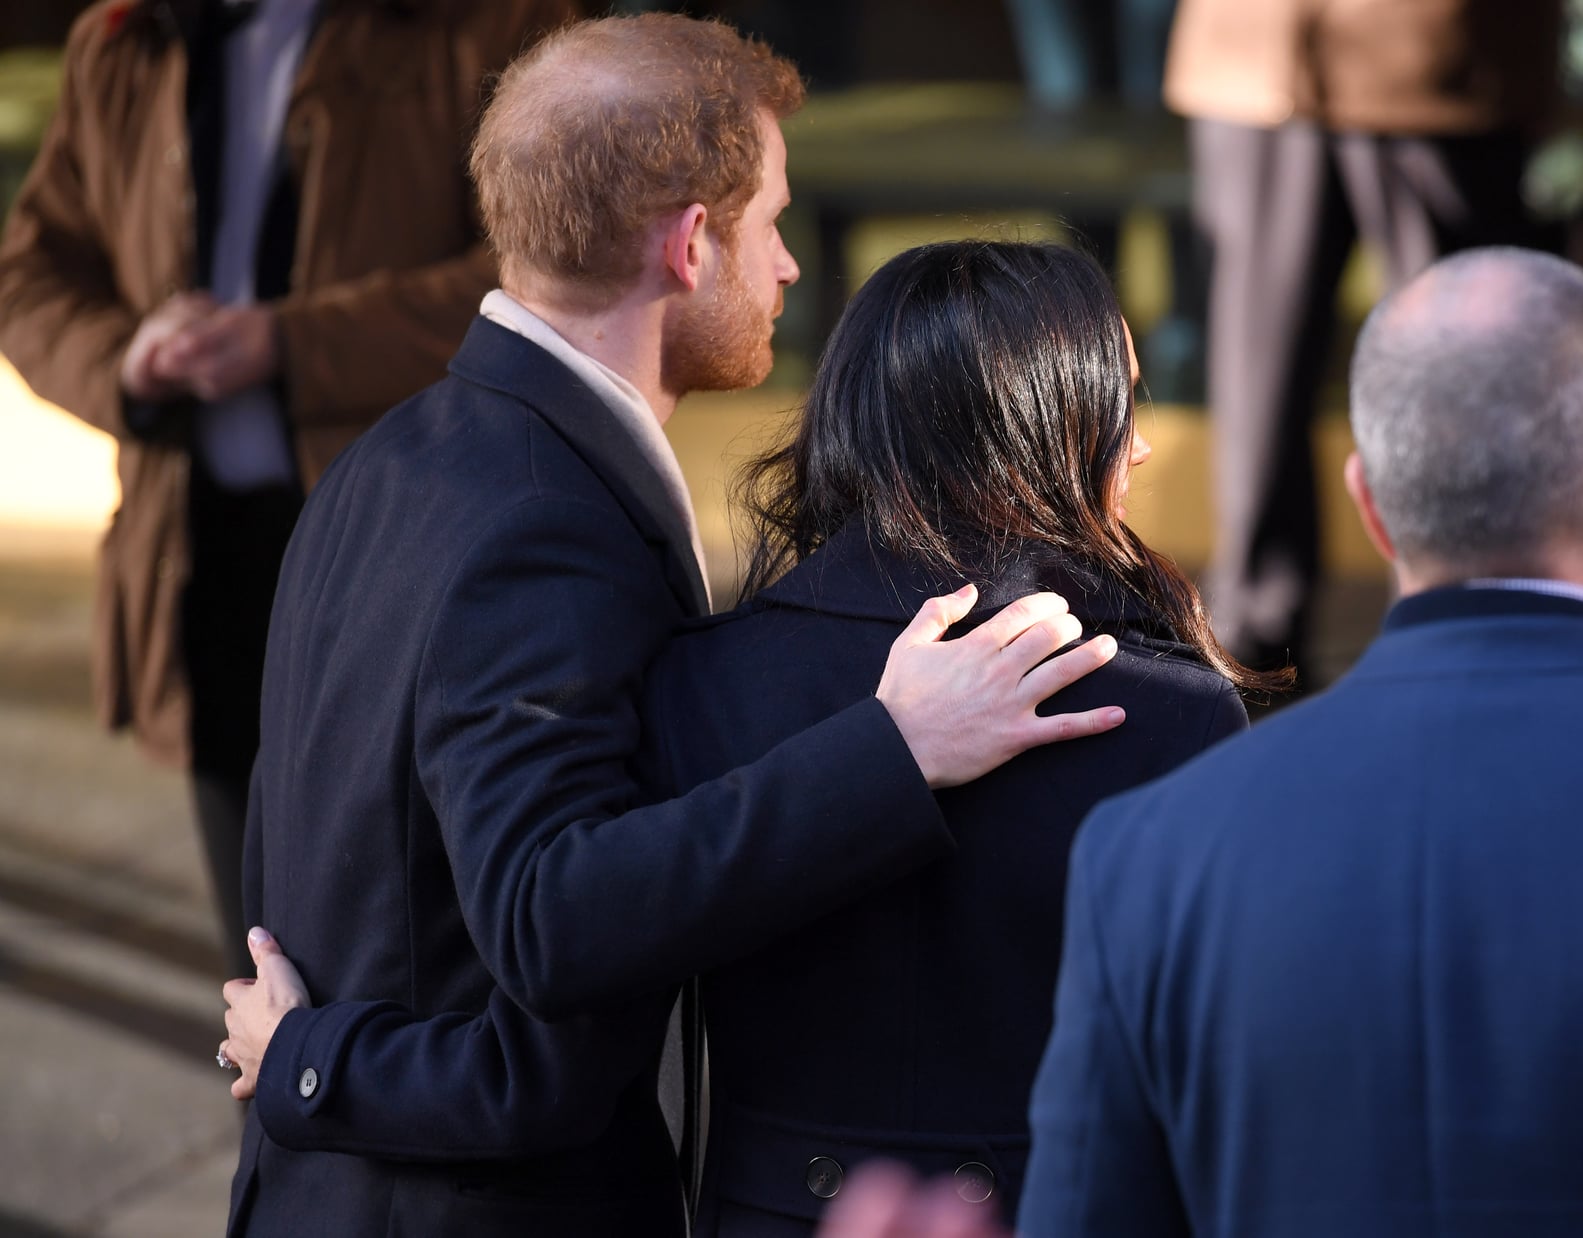 Meghan Markle and Prince Harry Hands on Each Other's Backs | POPSUGAR ...